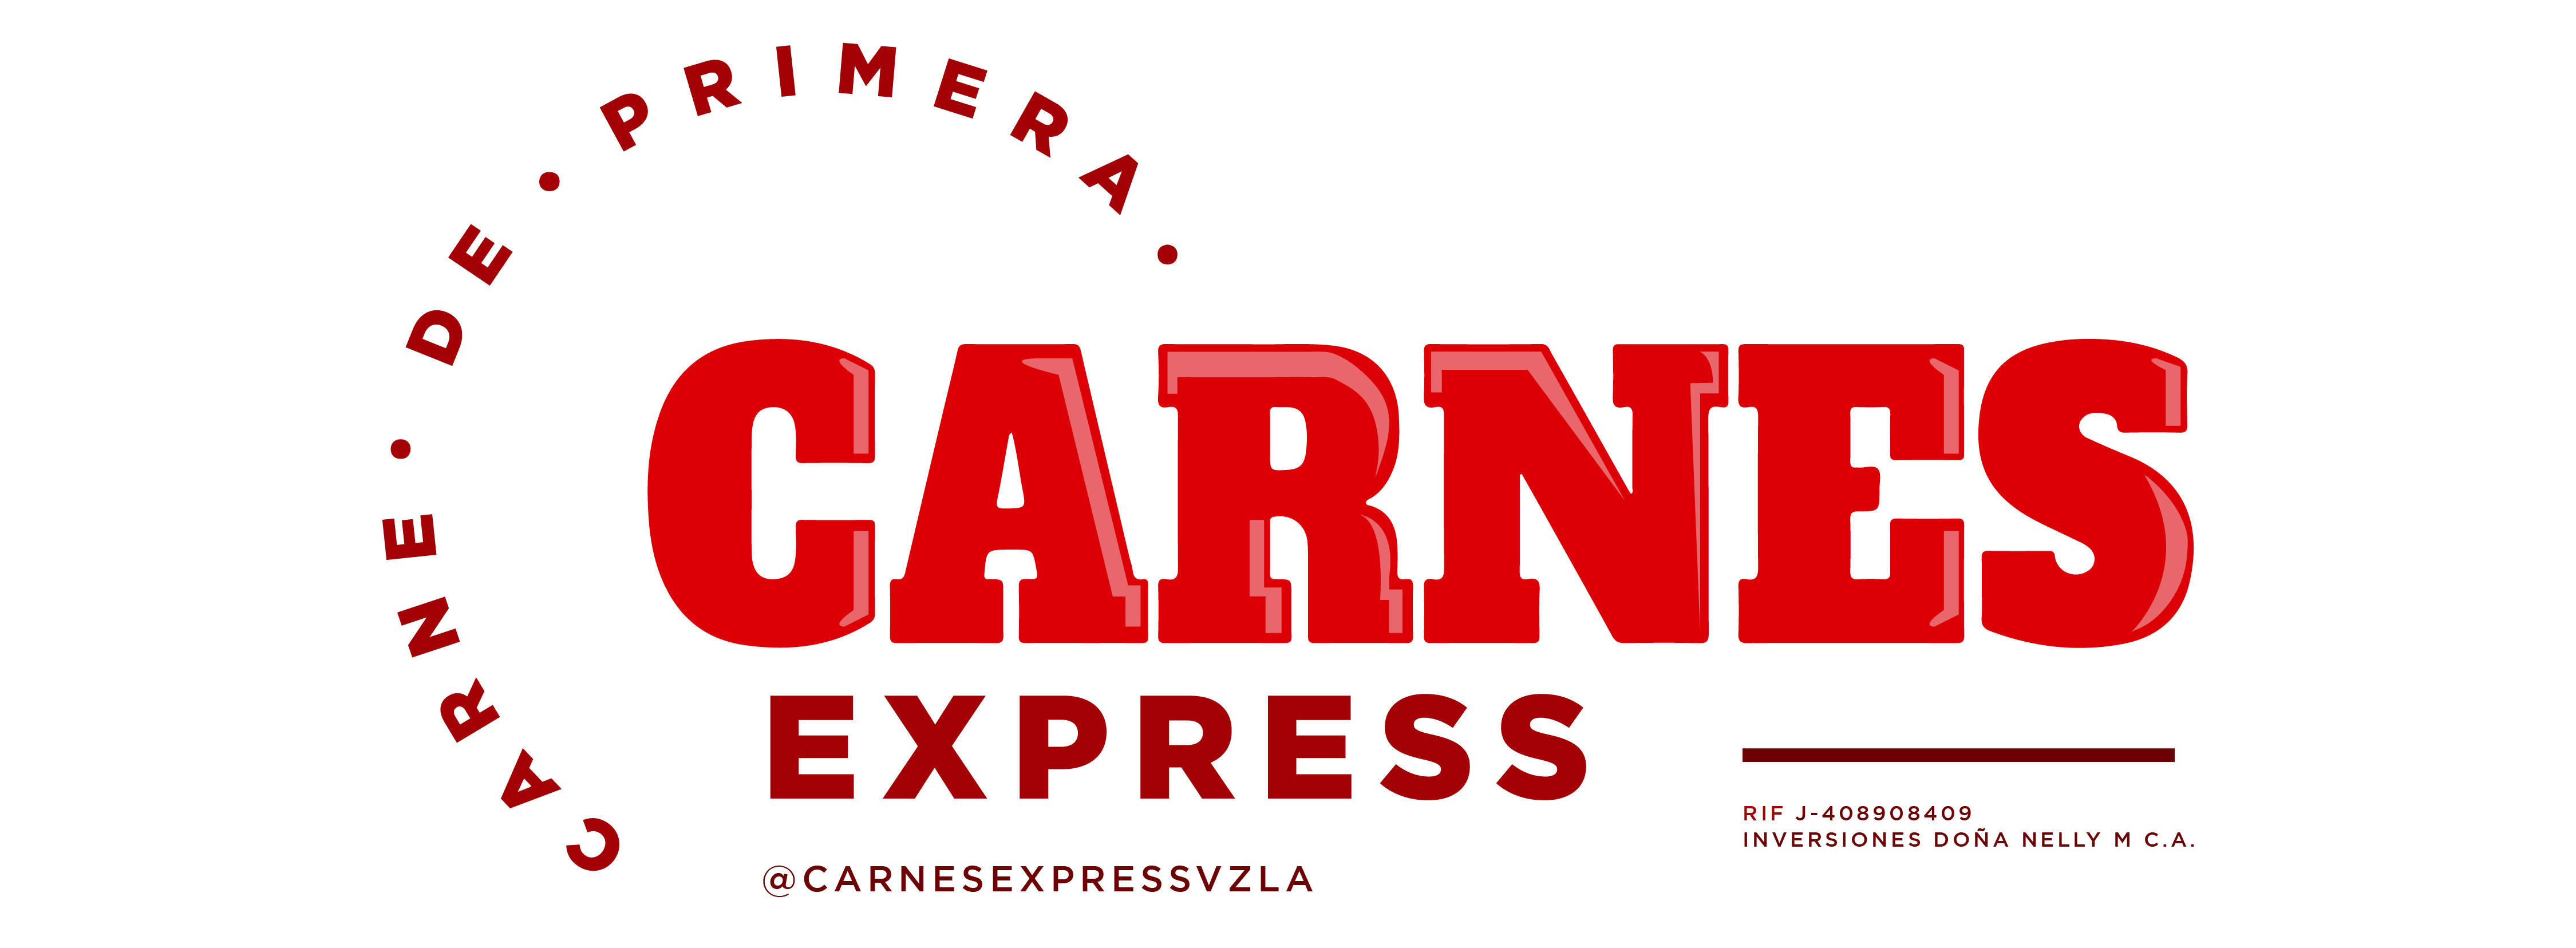 Carnes Express